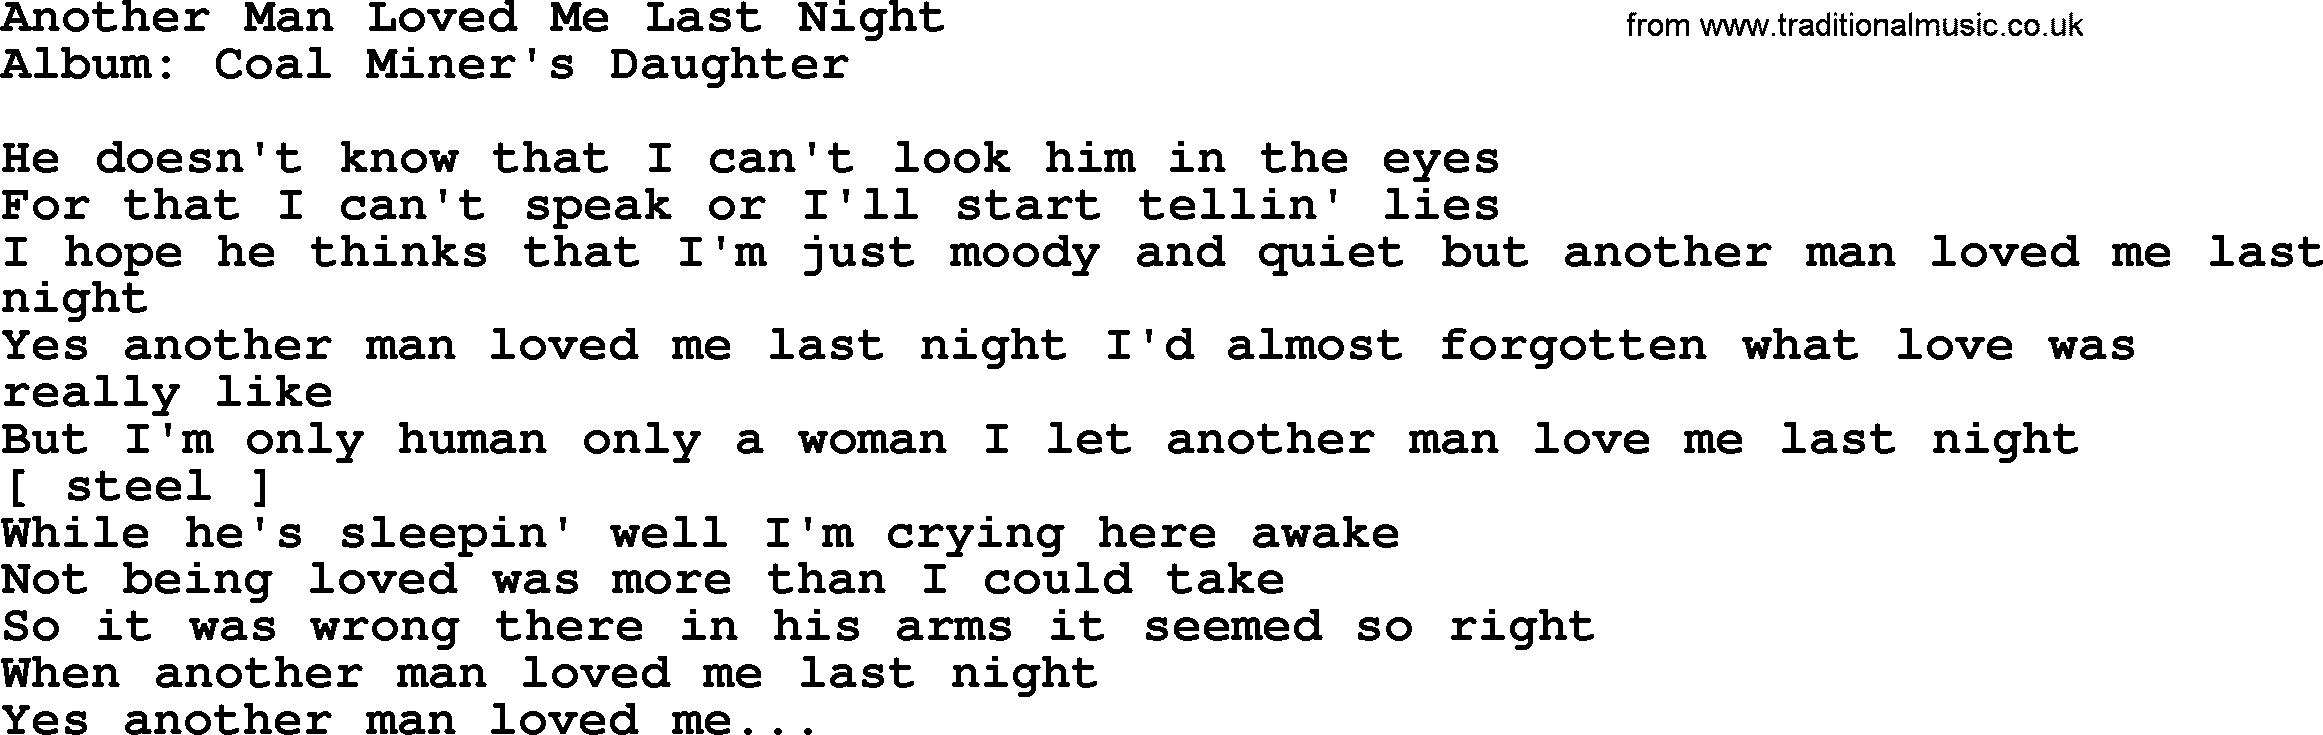 Loretta Lynn song: Another Man Loved Me Last Night lyrics